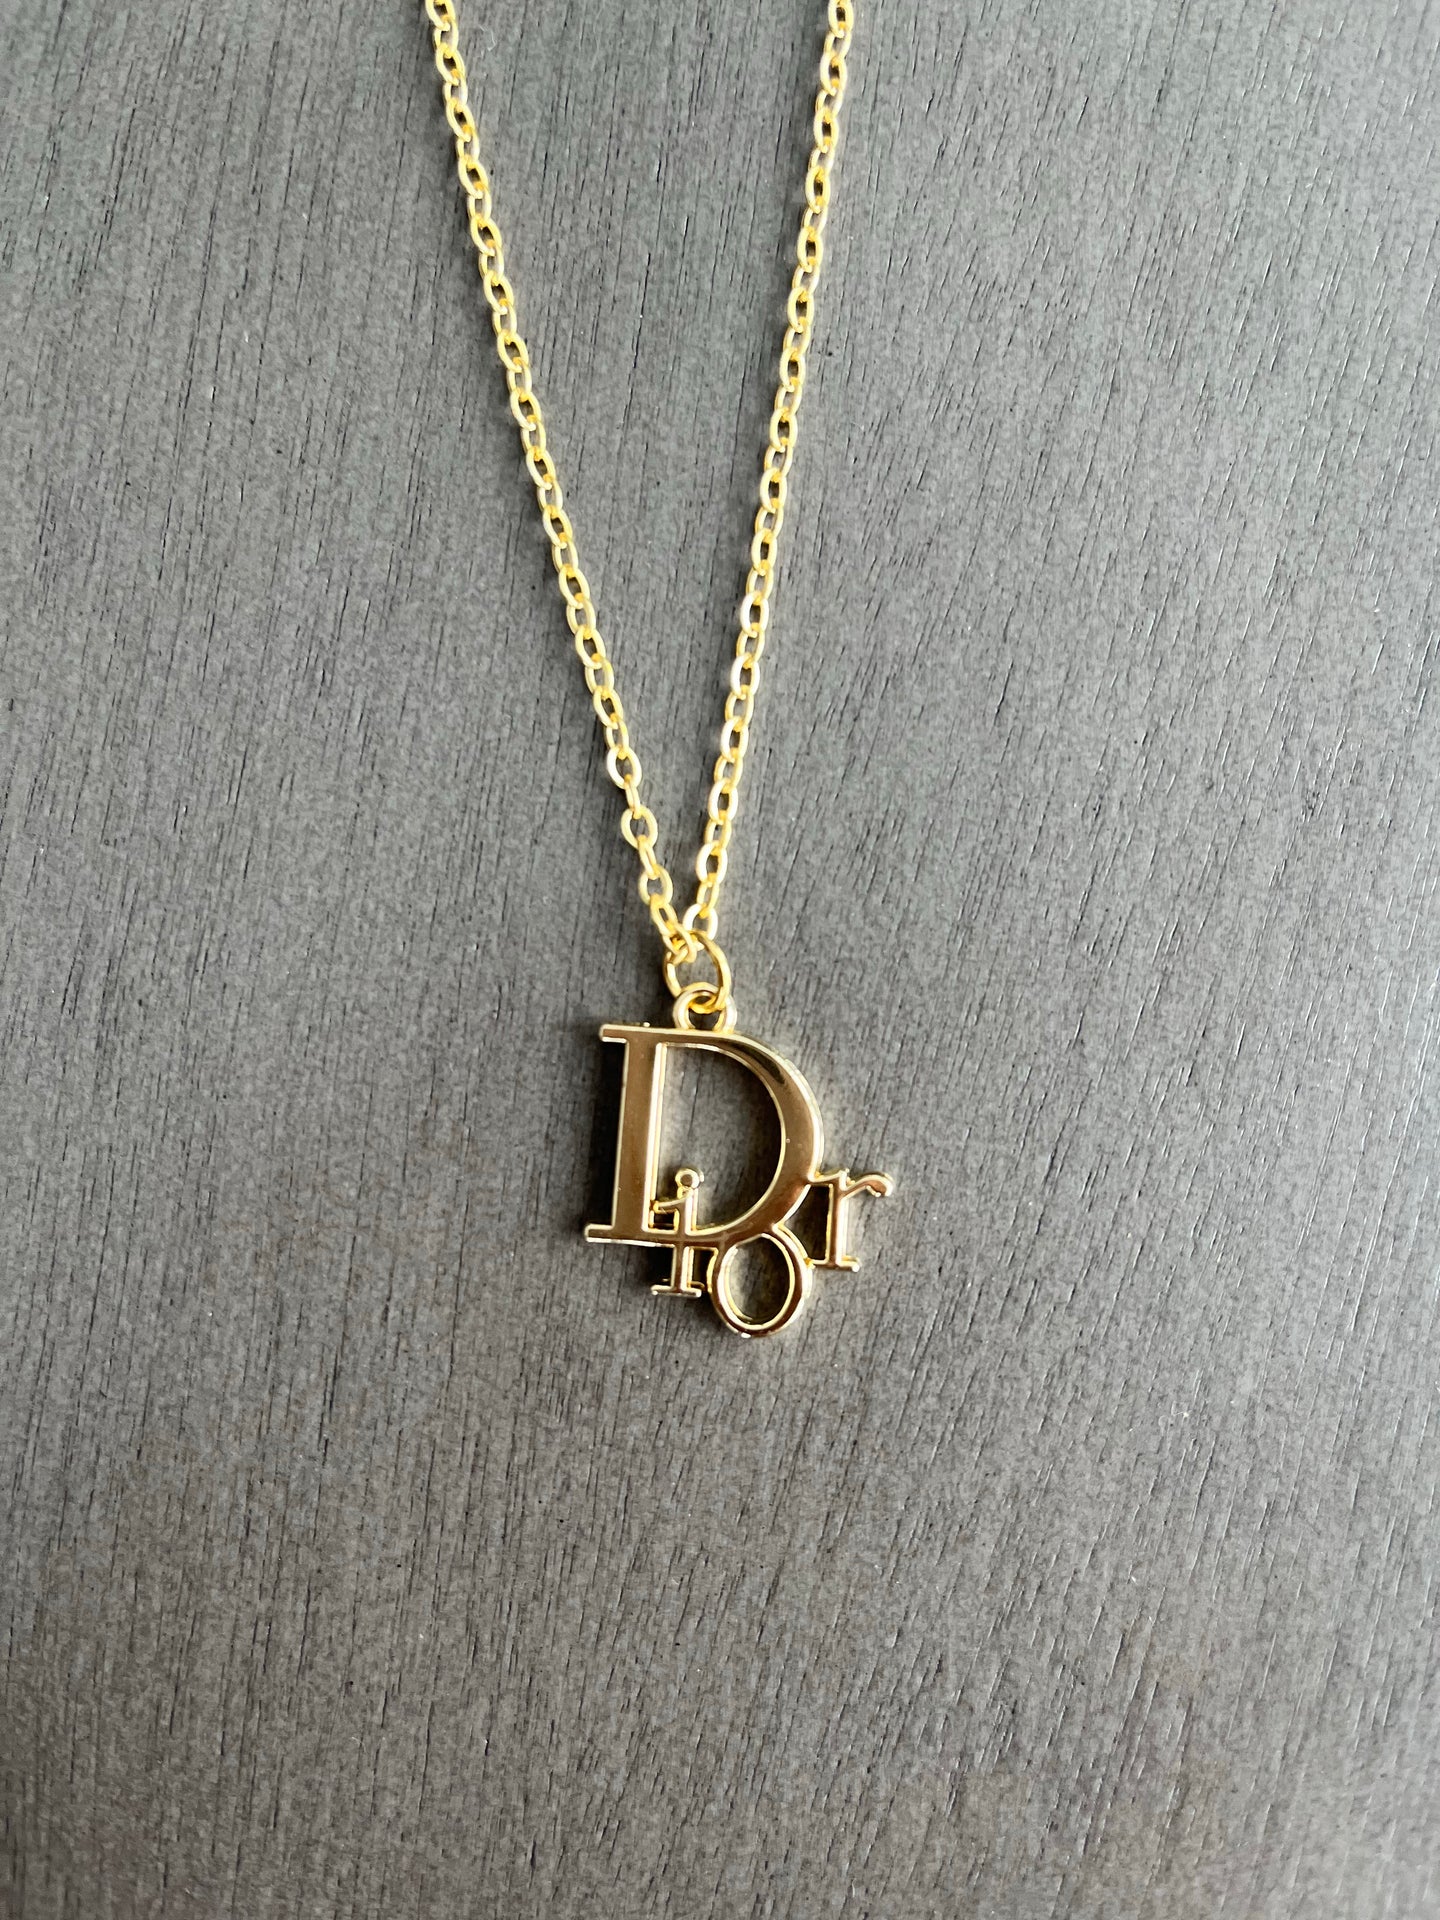 Upcycled Designer Christian Dior “DIOR” Pendant Necklace